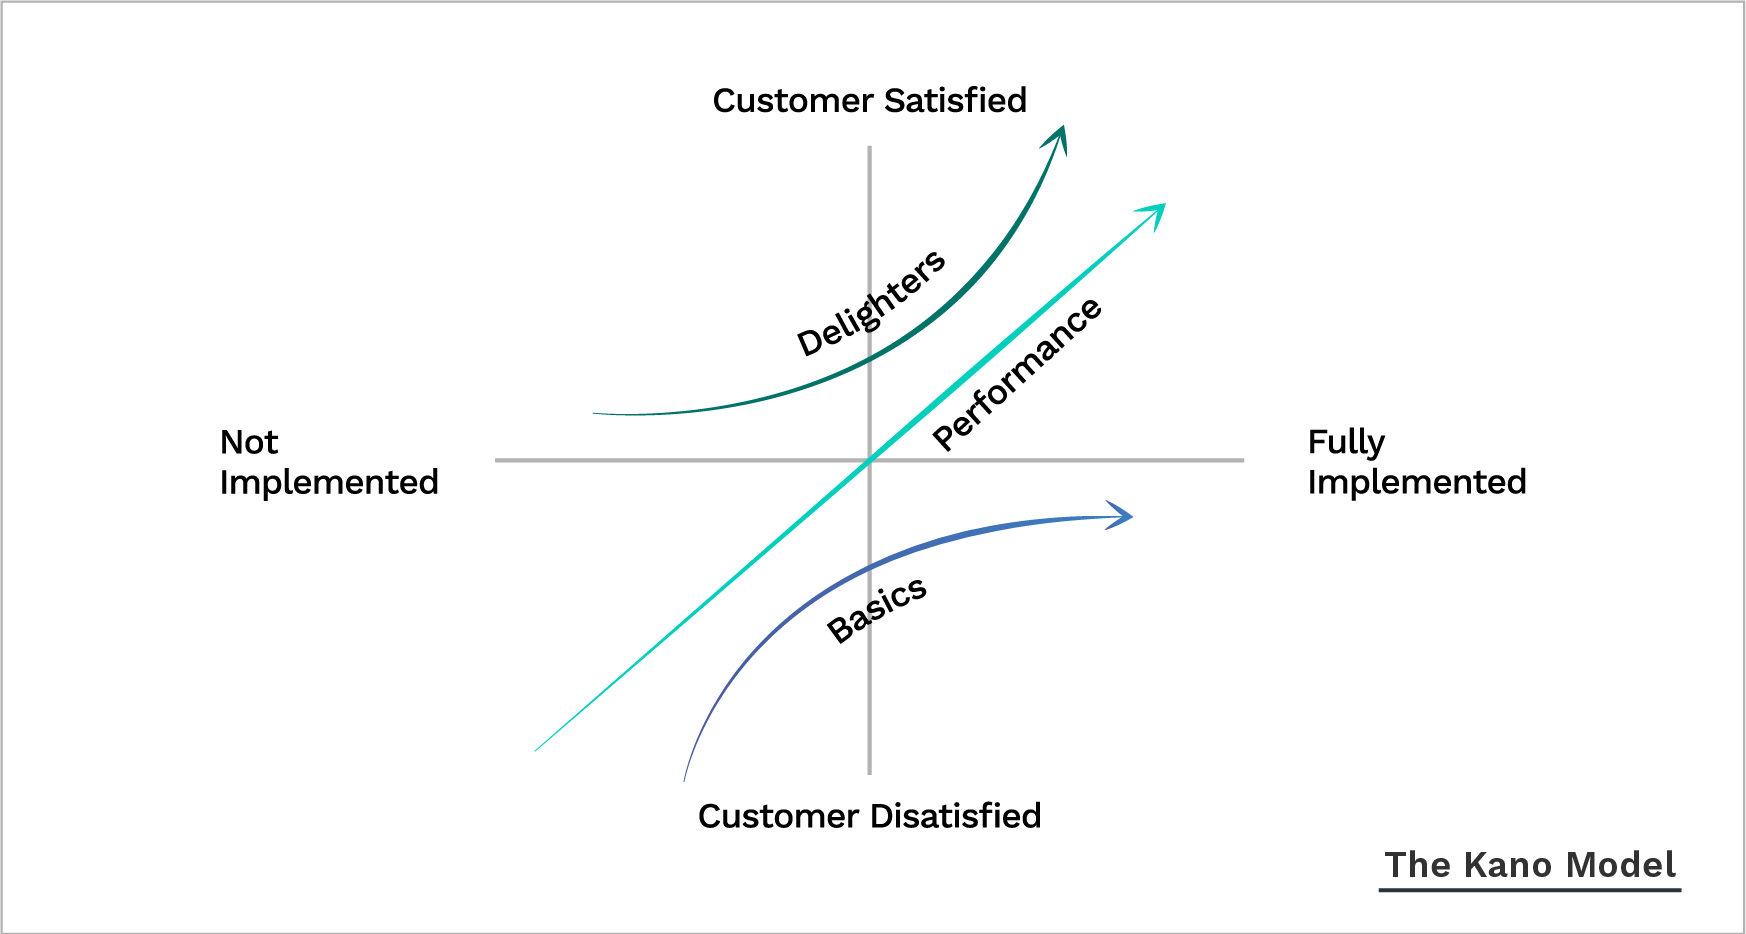 Kano model - product prioritization framework